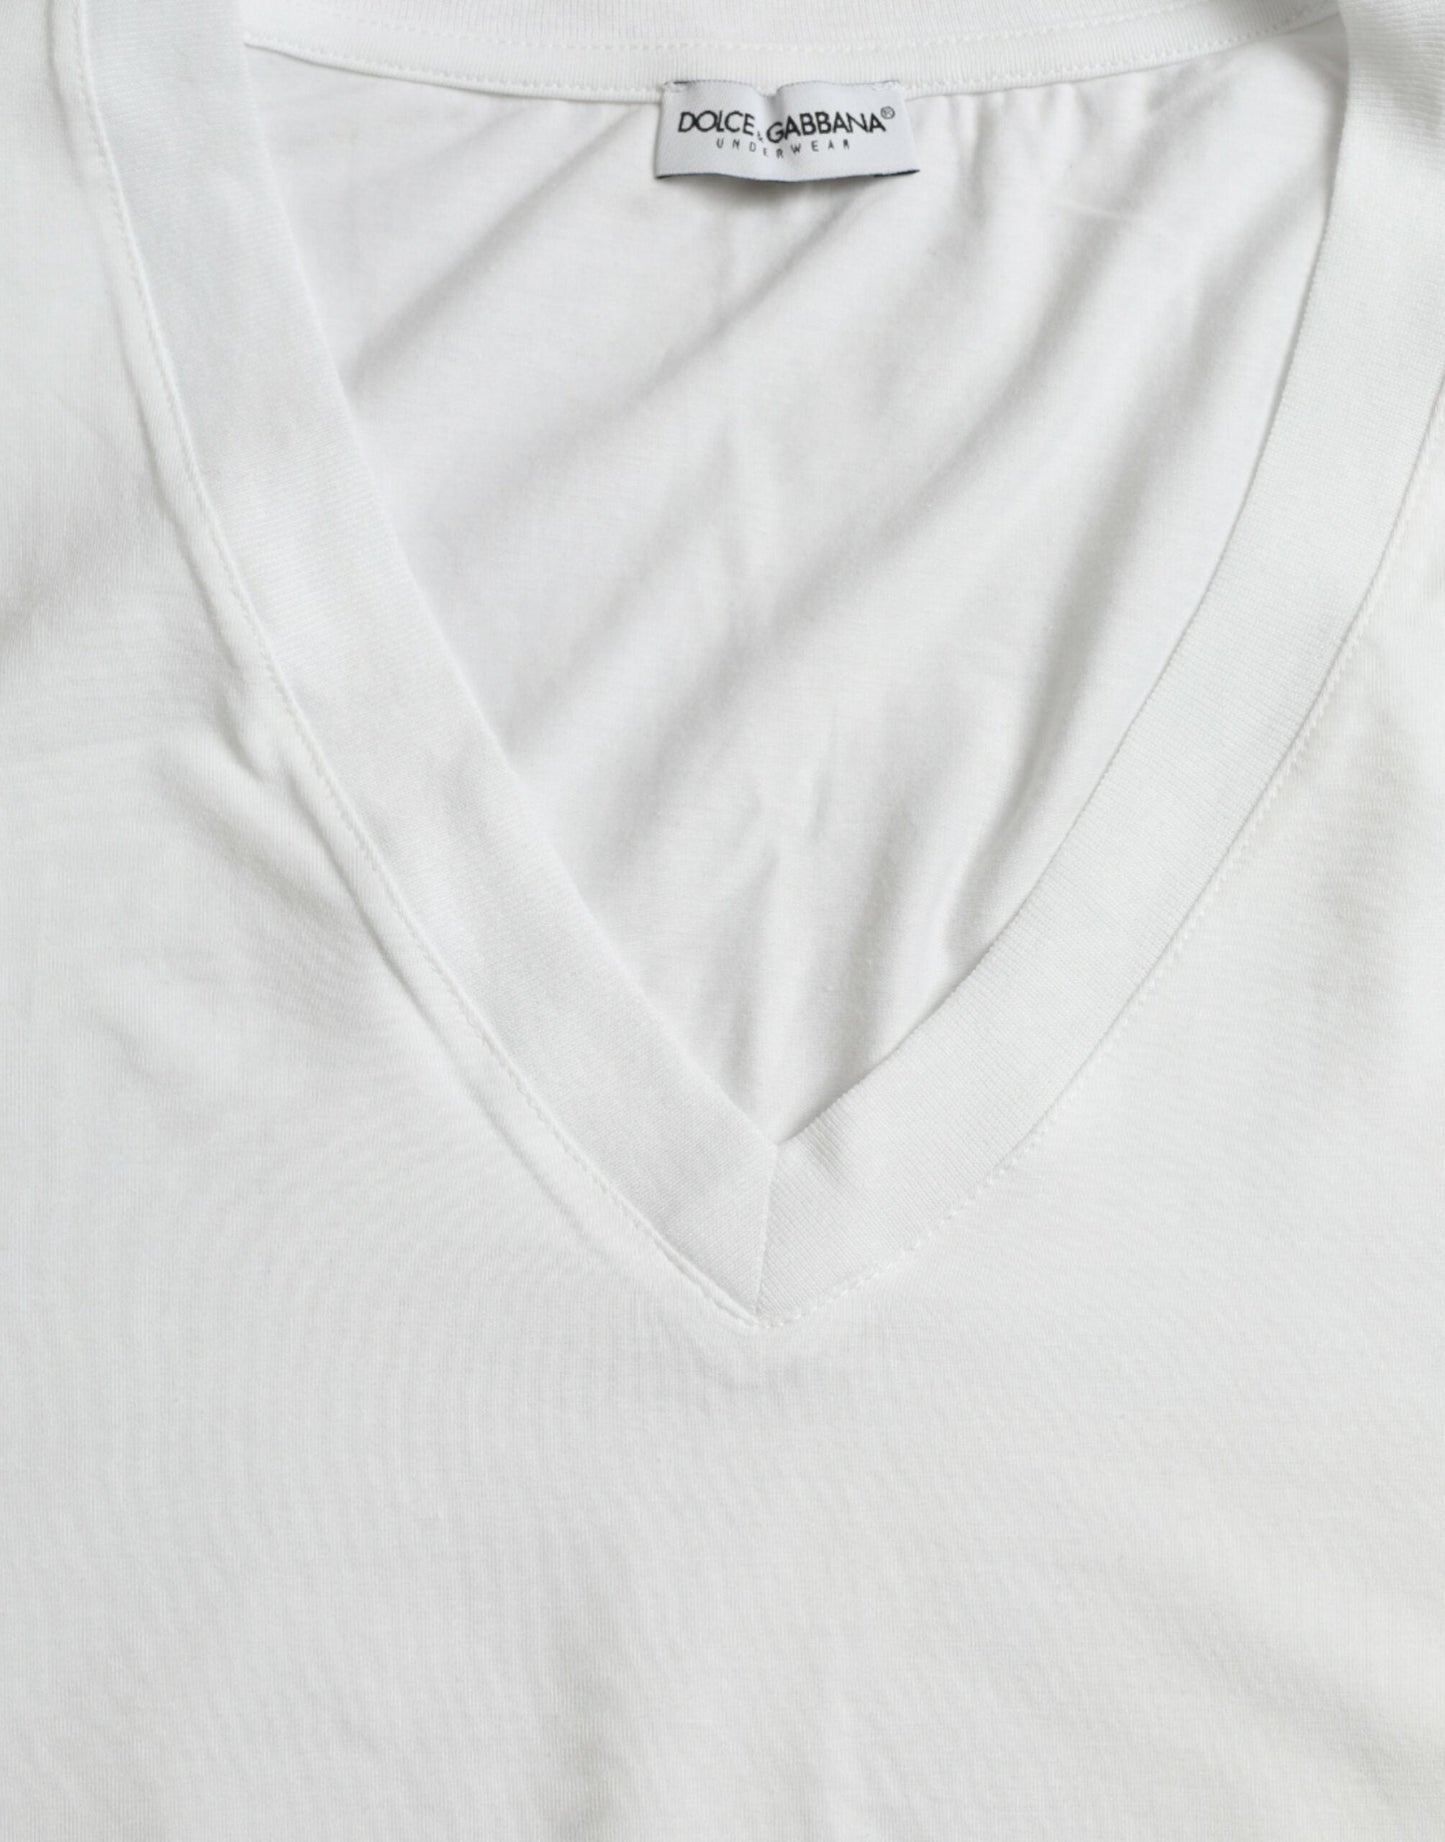 Fashionsarah.com Fashionsarah.com Dolce & Gabbana White Cotton V-neck Short Sleeve Underwear T-shirt